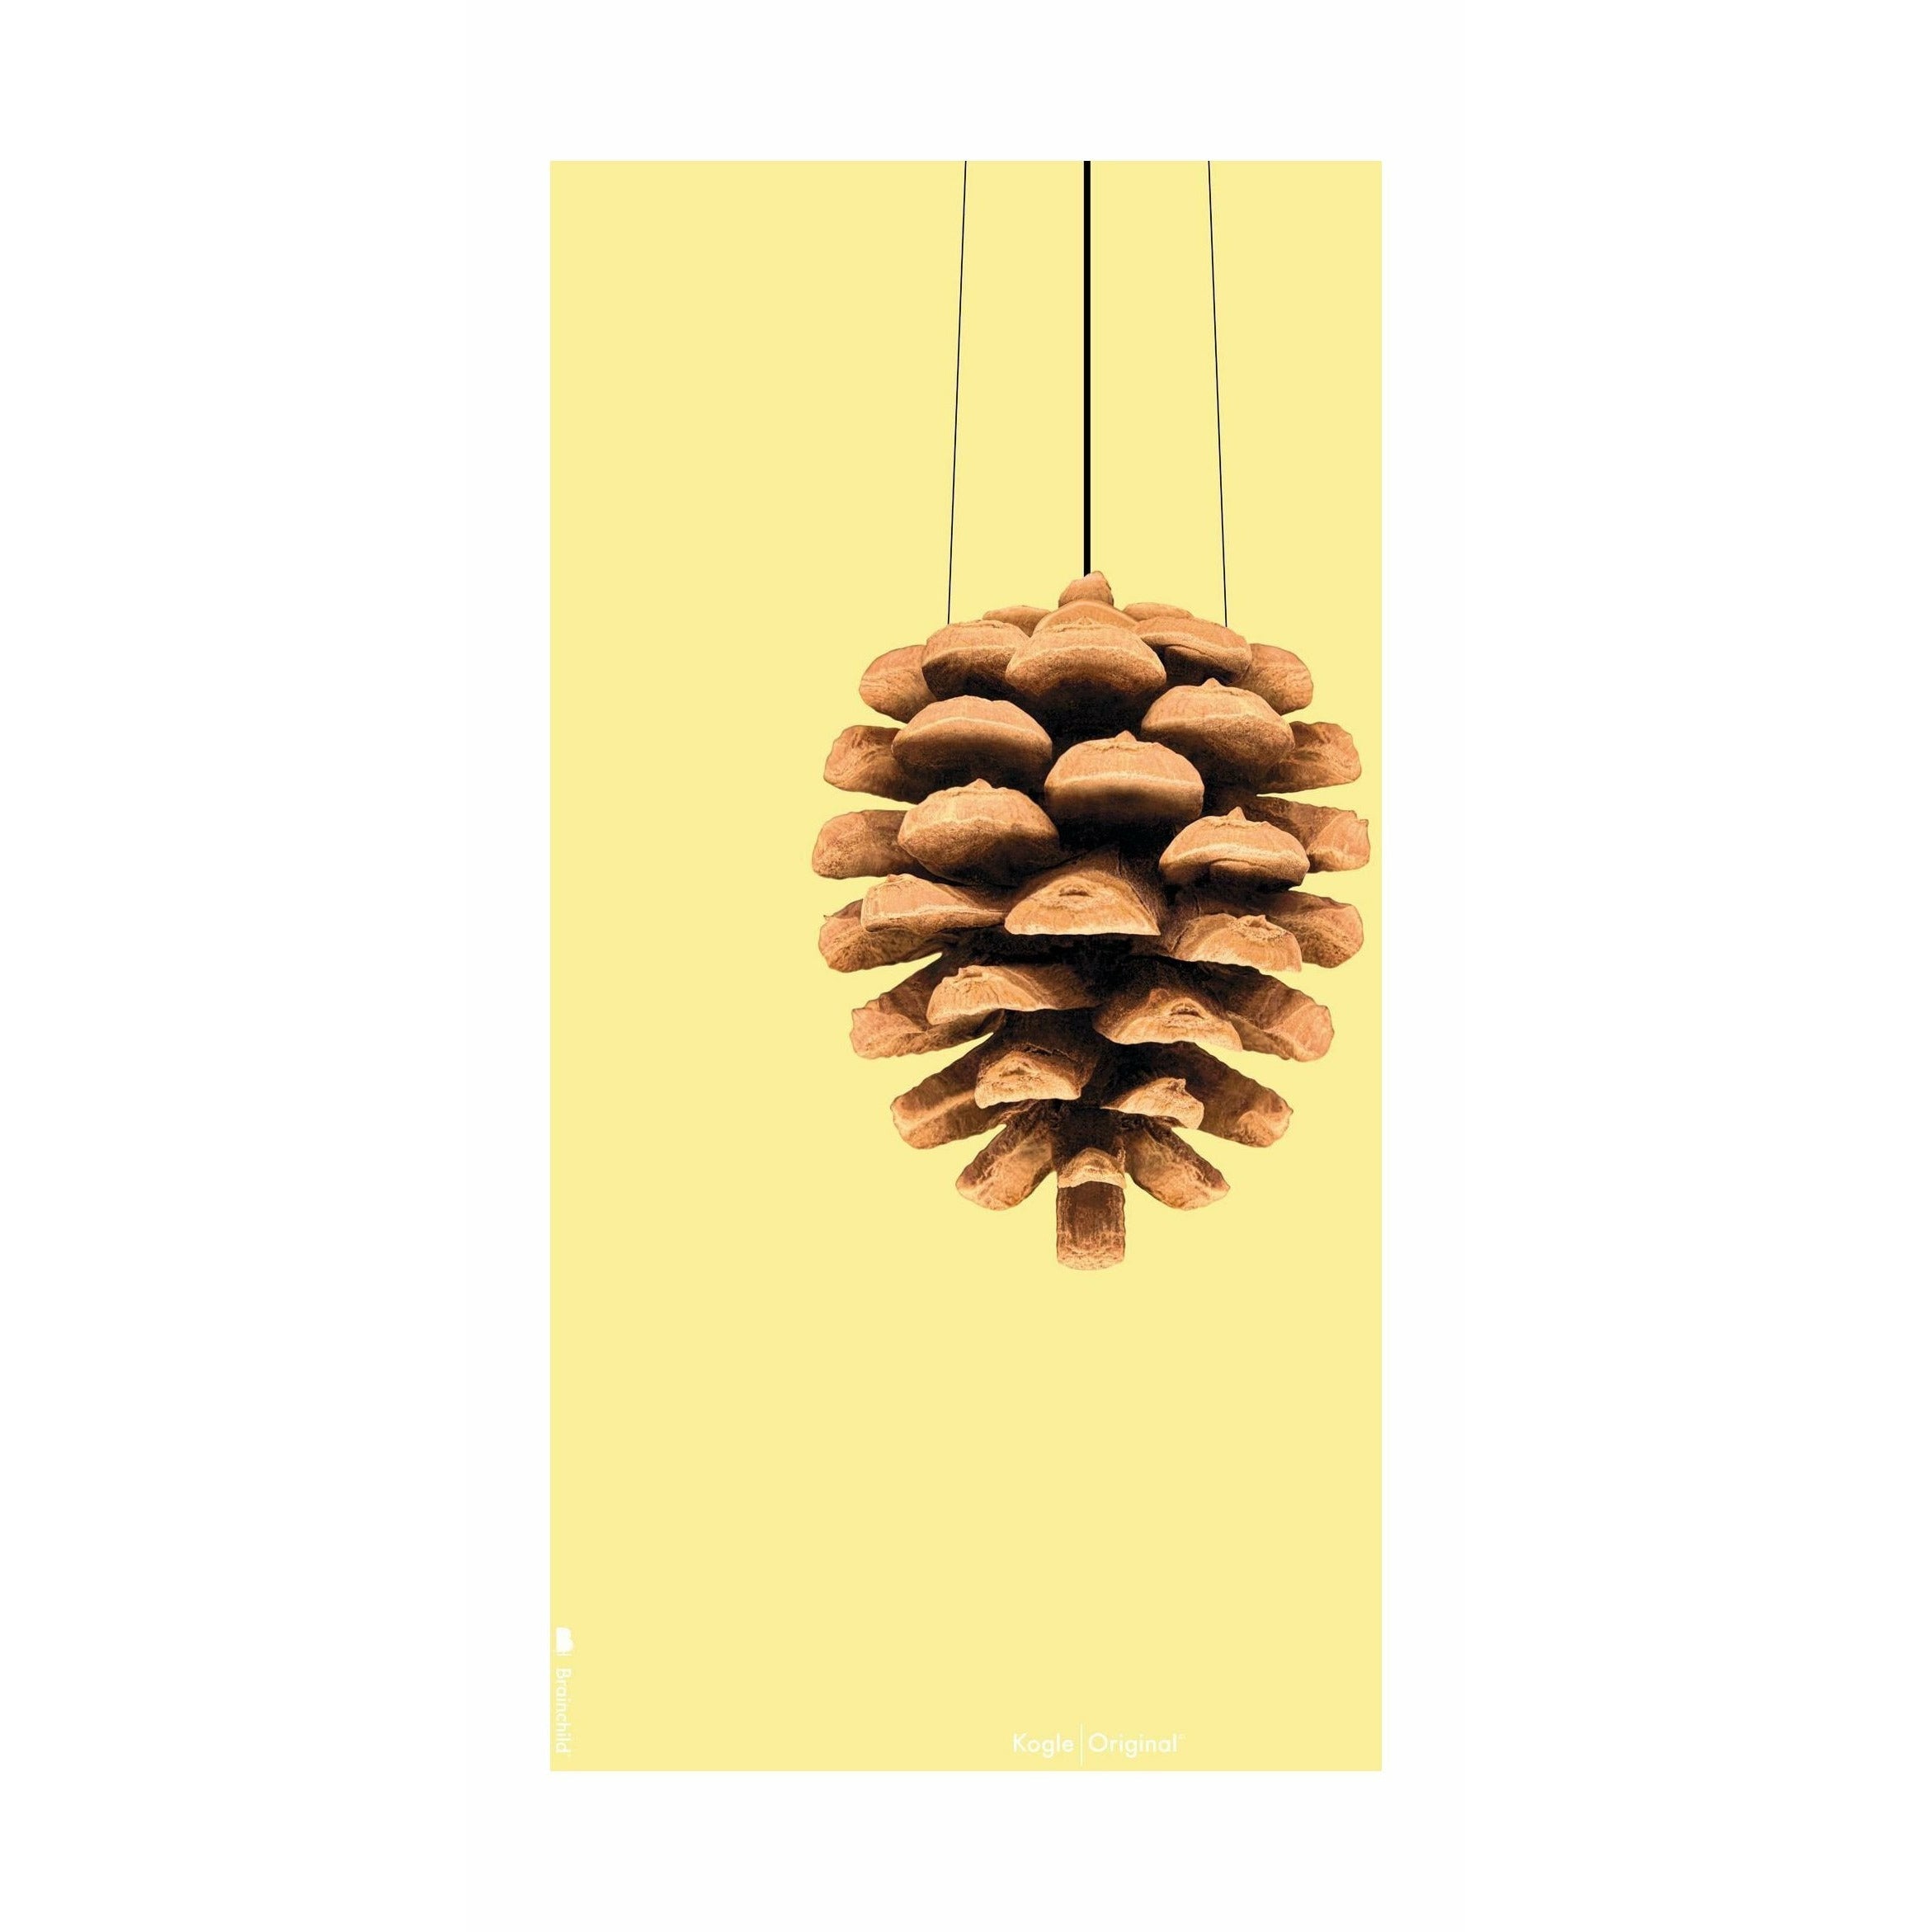 Brainchild Pine Cone Classic Poster uten ramme 50x70 cm, gul bakgrunn